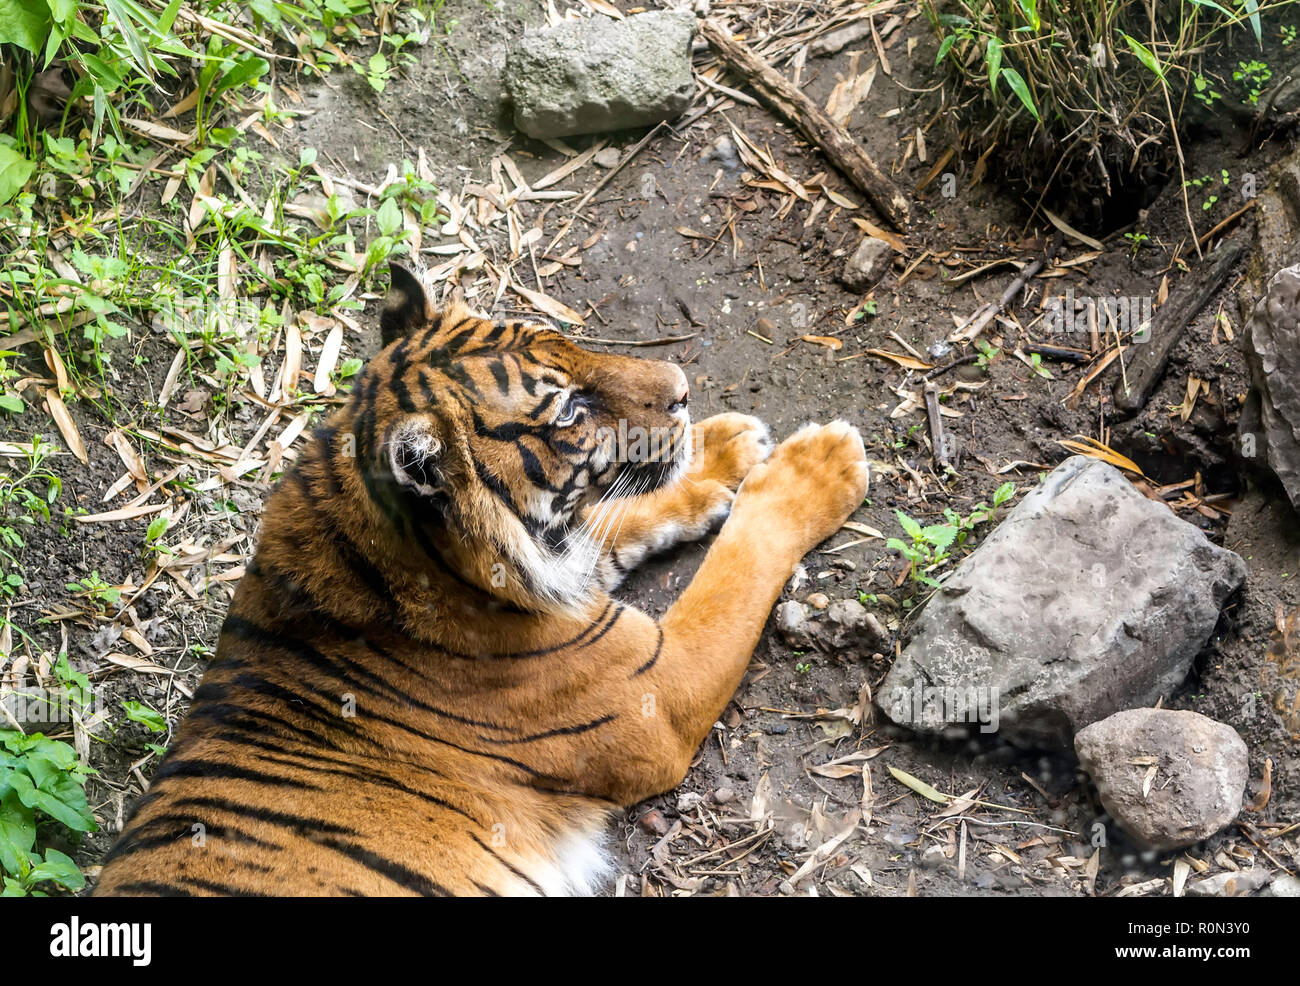 Sumatran tiger (Panthera tigris sondaica) lying calmly on the ground. Stock Photo